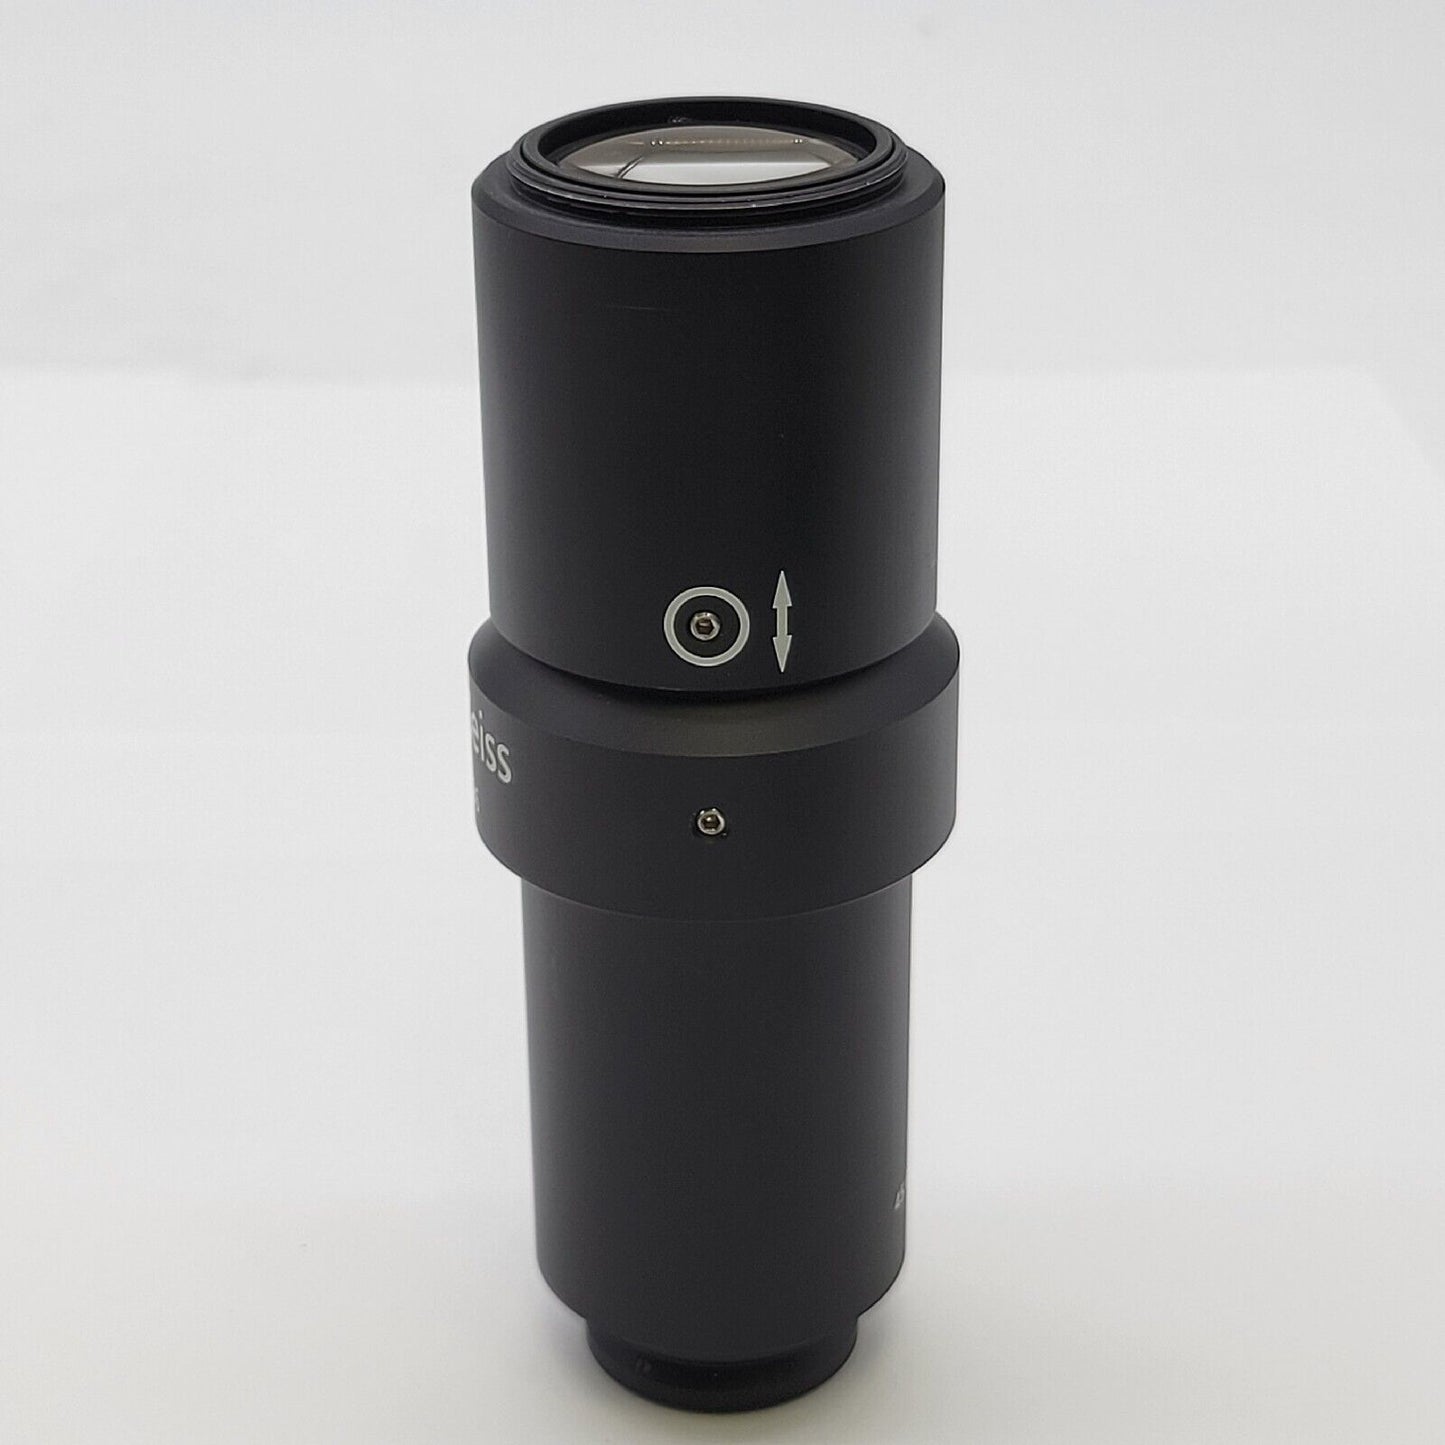 Zeiss Microscope Camera Adapter 426126 & 456006 - microscopemarketplace